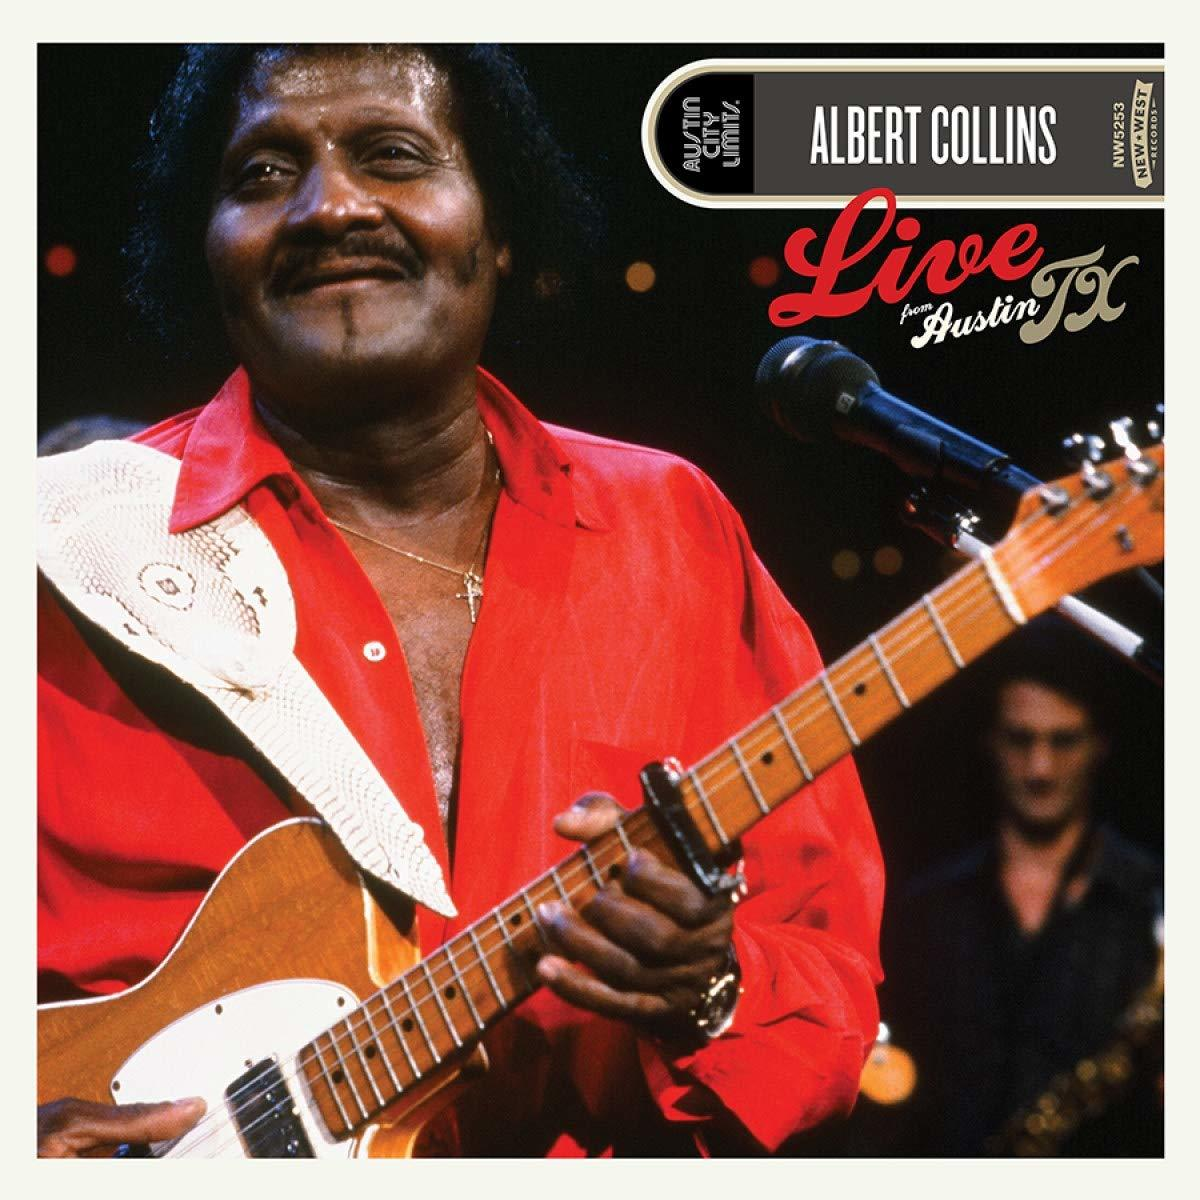 Albert Collins - Live From Austin,TX (Vinyl) (2LP,180g) 